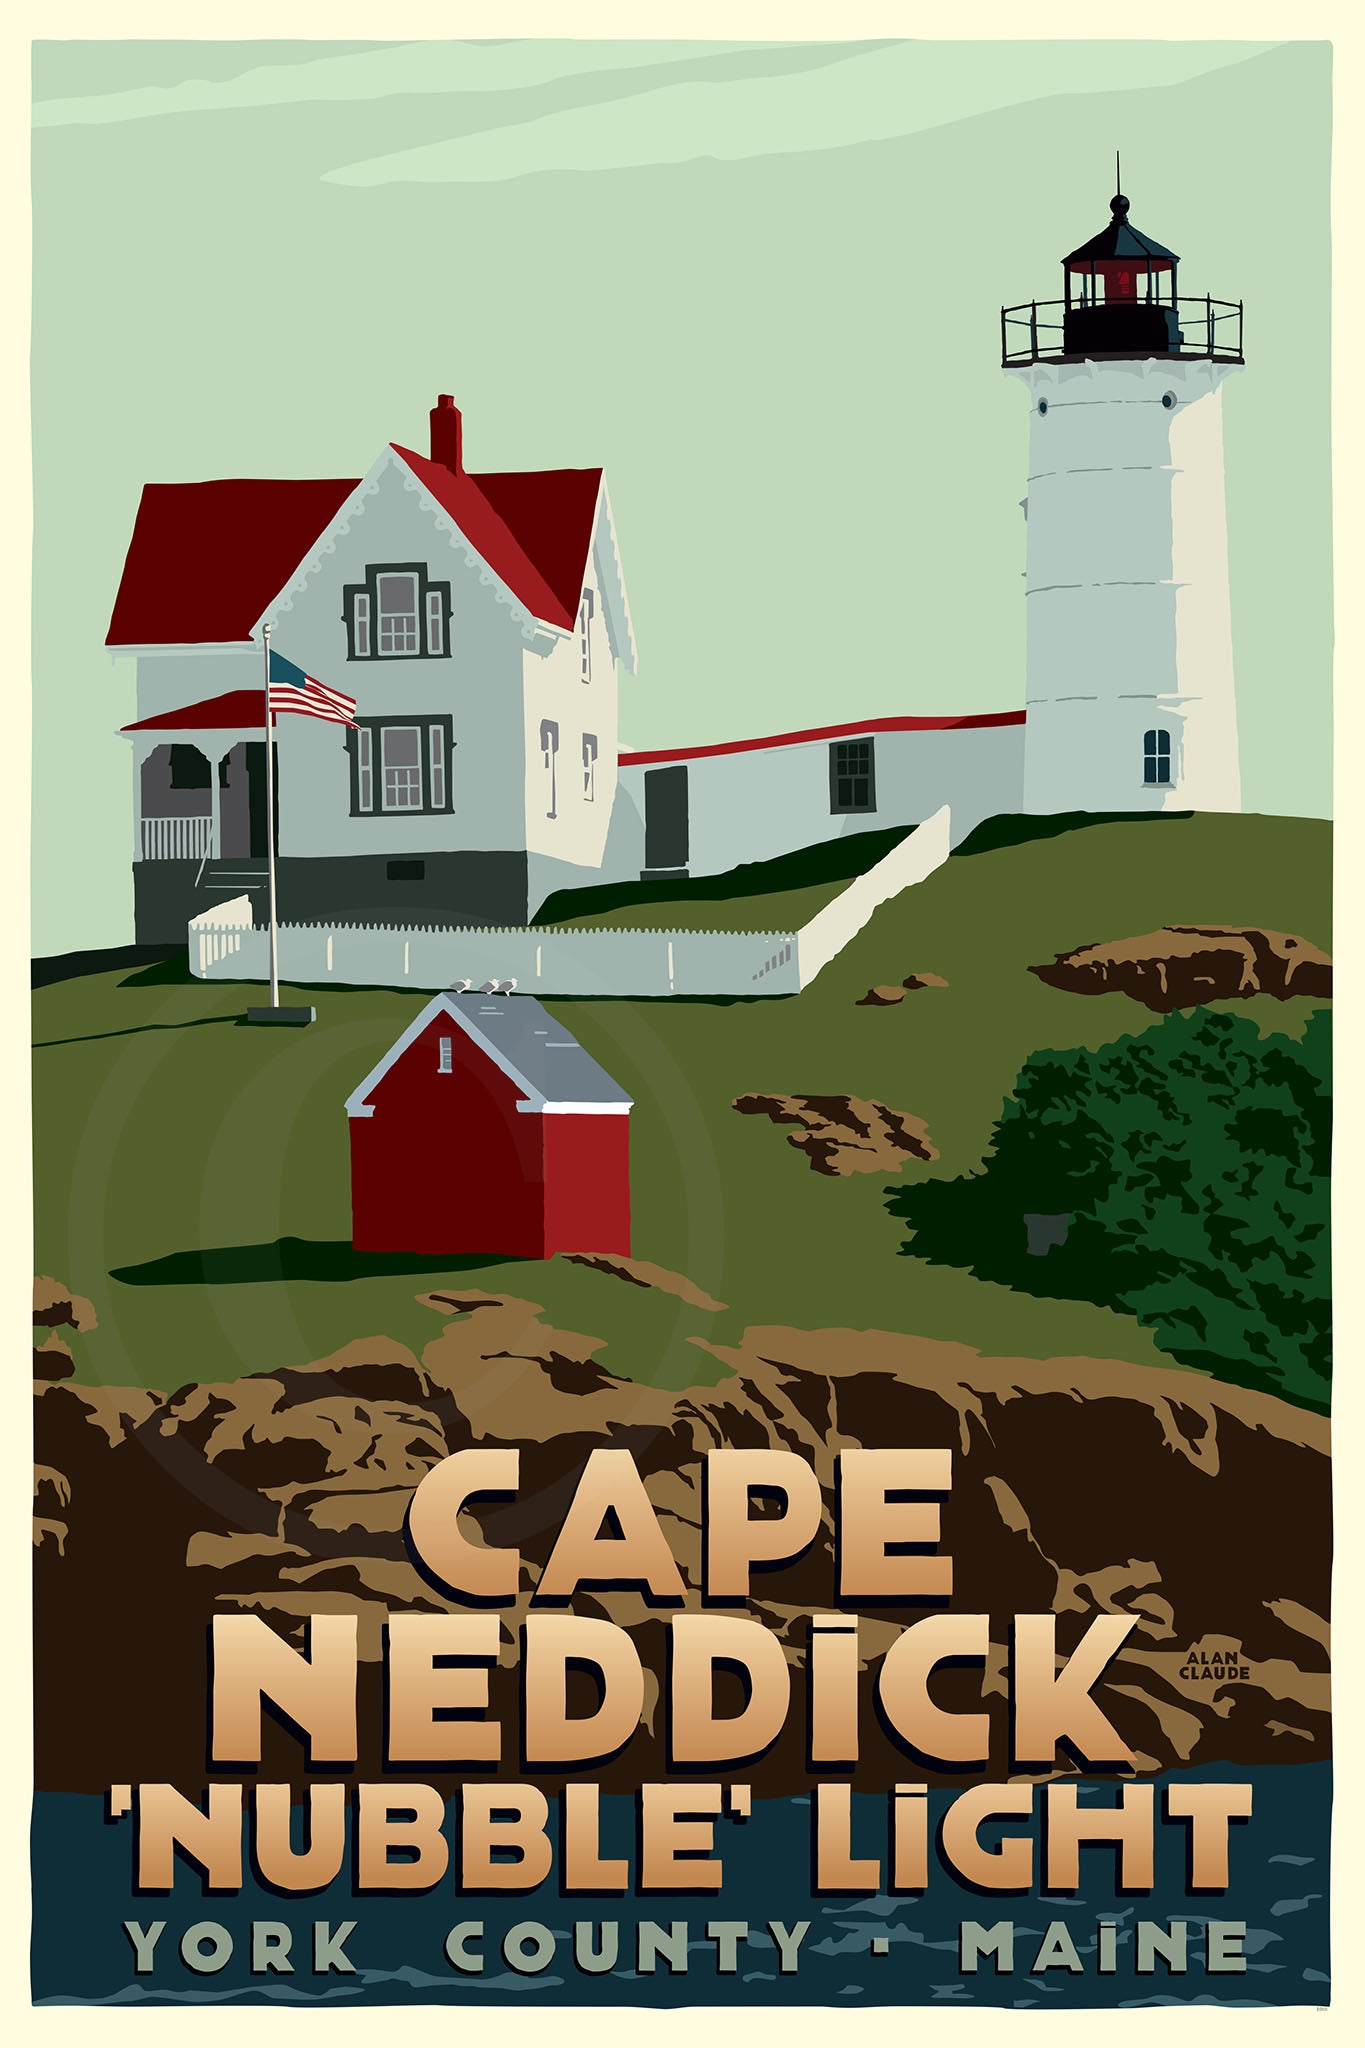 Cape Neddick Nubble Light Art Print 36" x 53" Travel Poster By Alan Claude - Maine